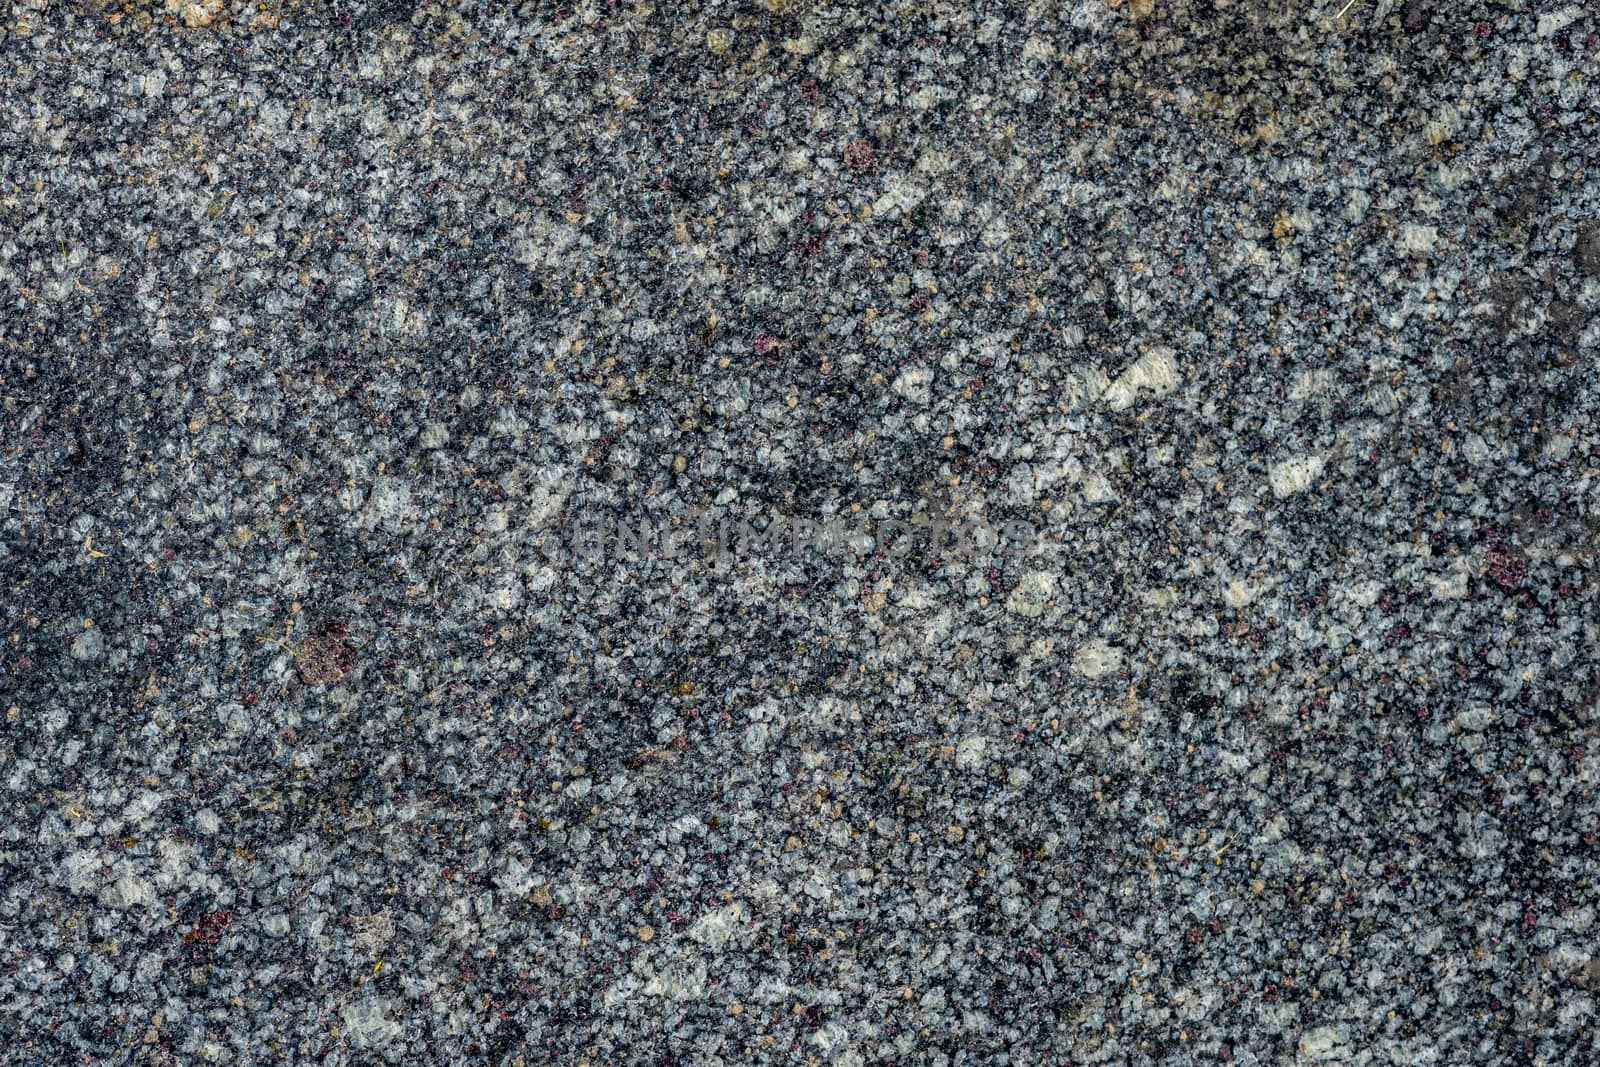 Texture of black polished granite. Granite tiles by Serhii_Voroshchuk